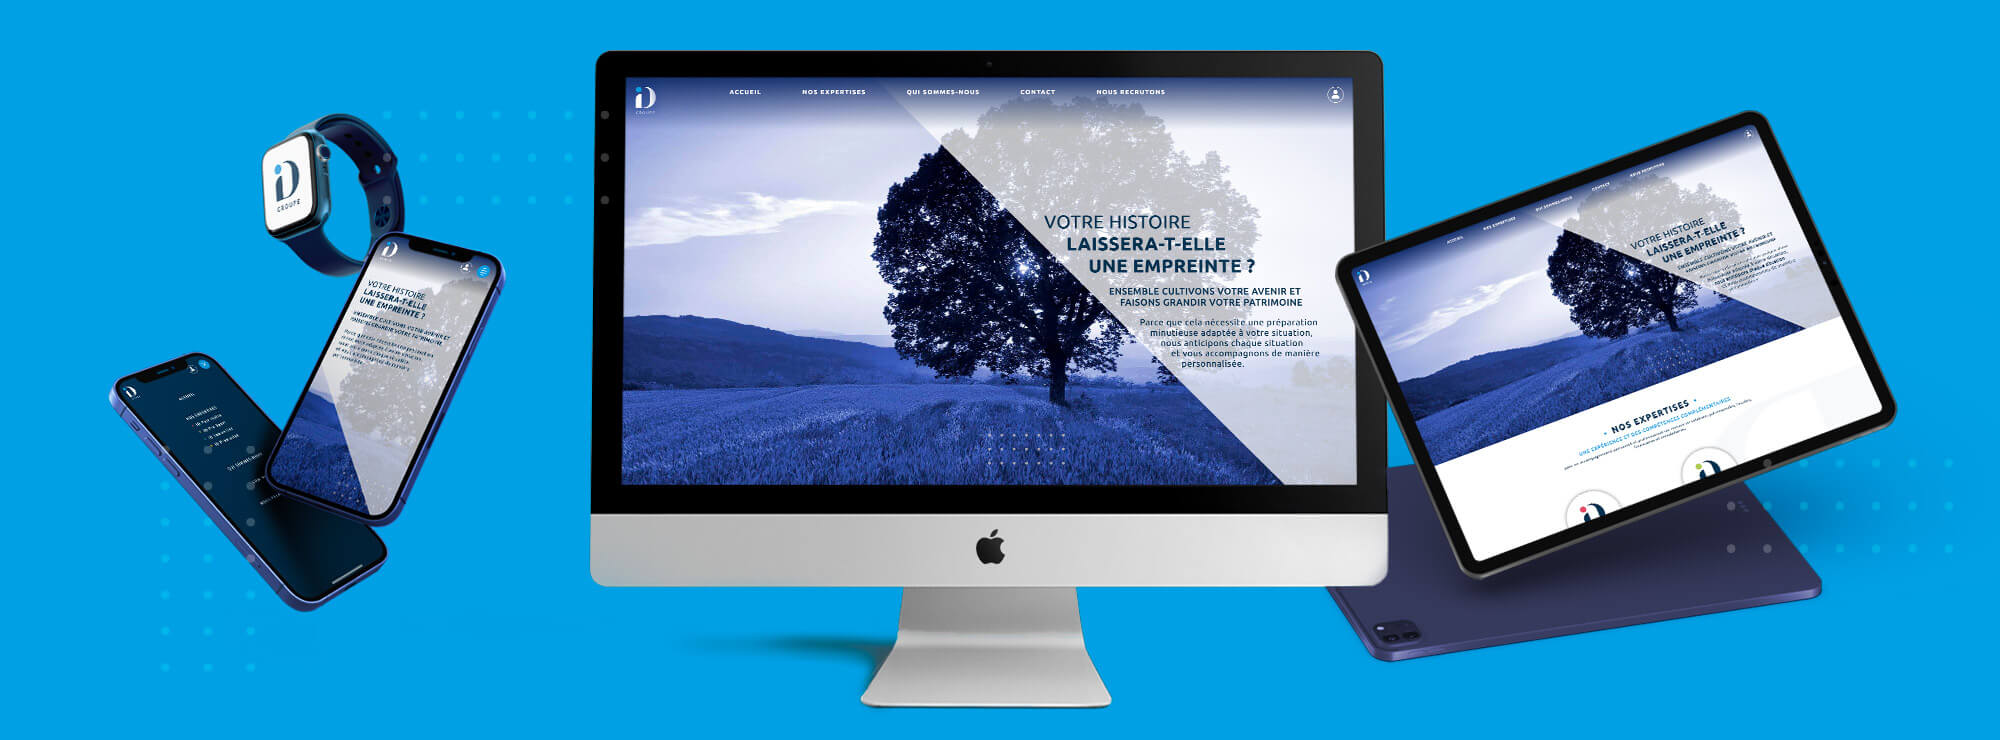 04 groupeid consulting visual identity webdesign responsive iphone ipad desktop home page applewatch.jpg